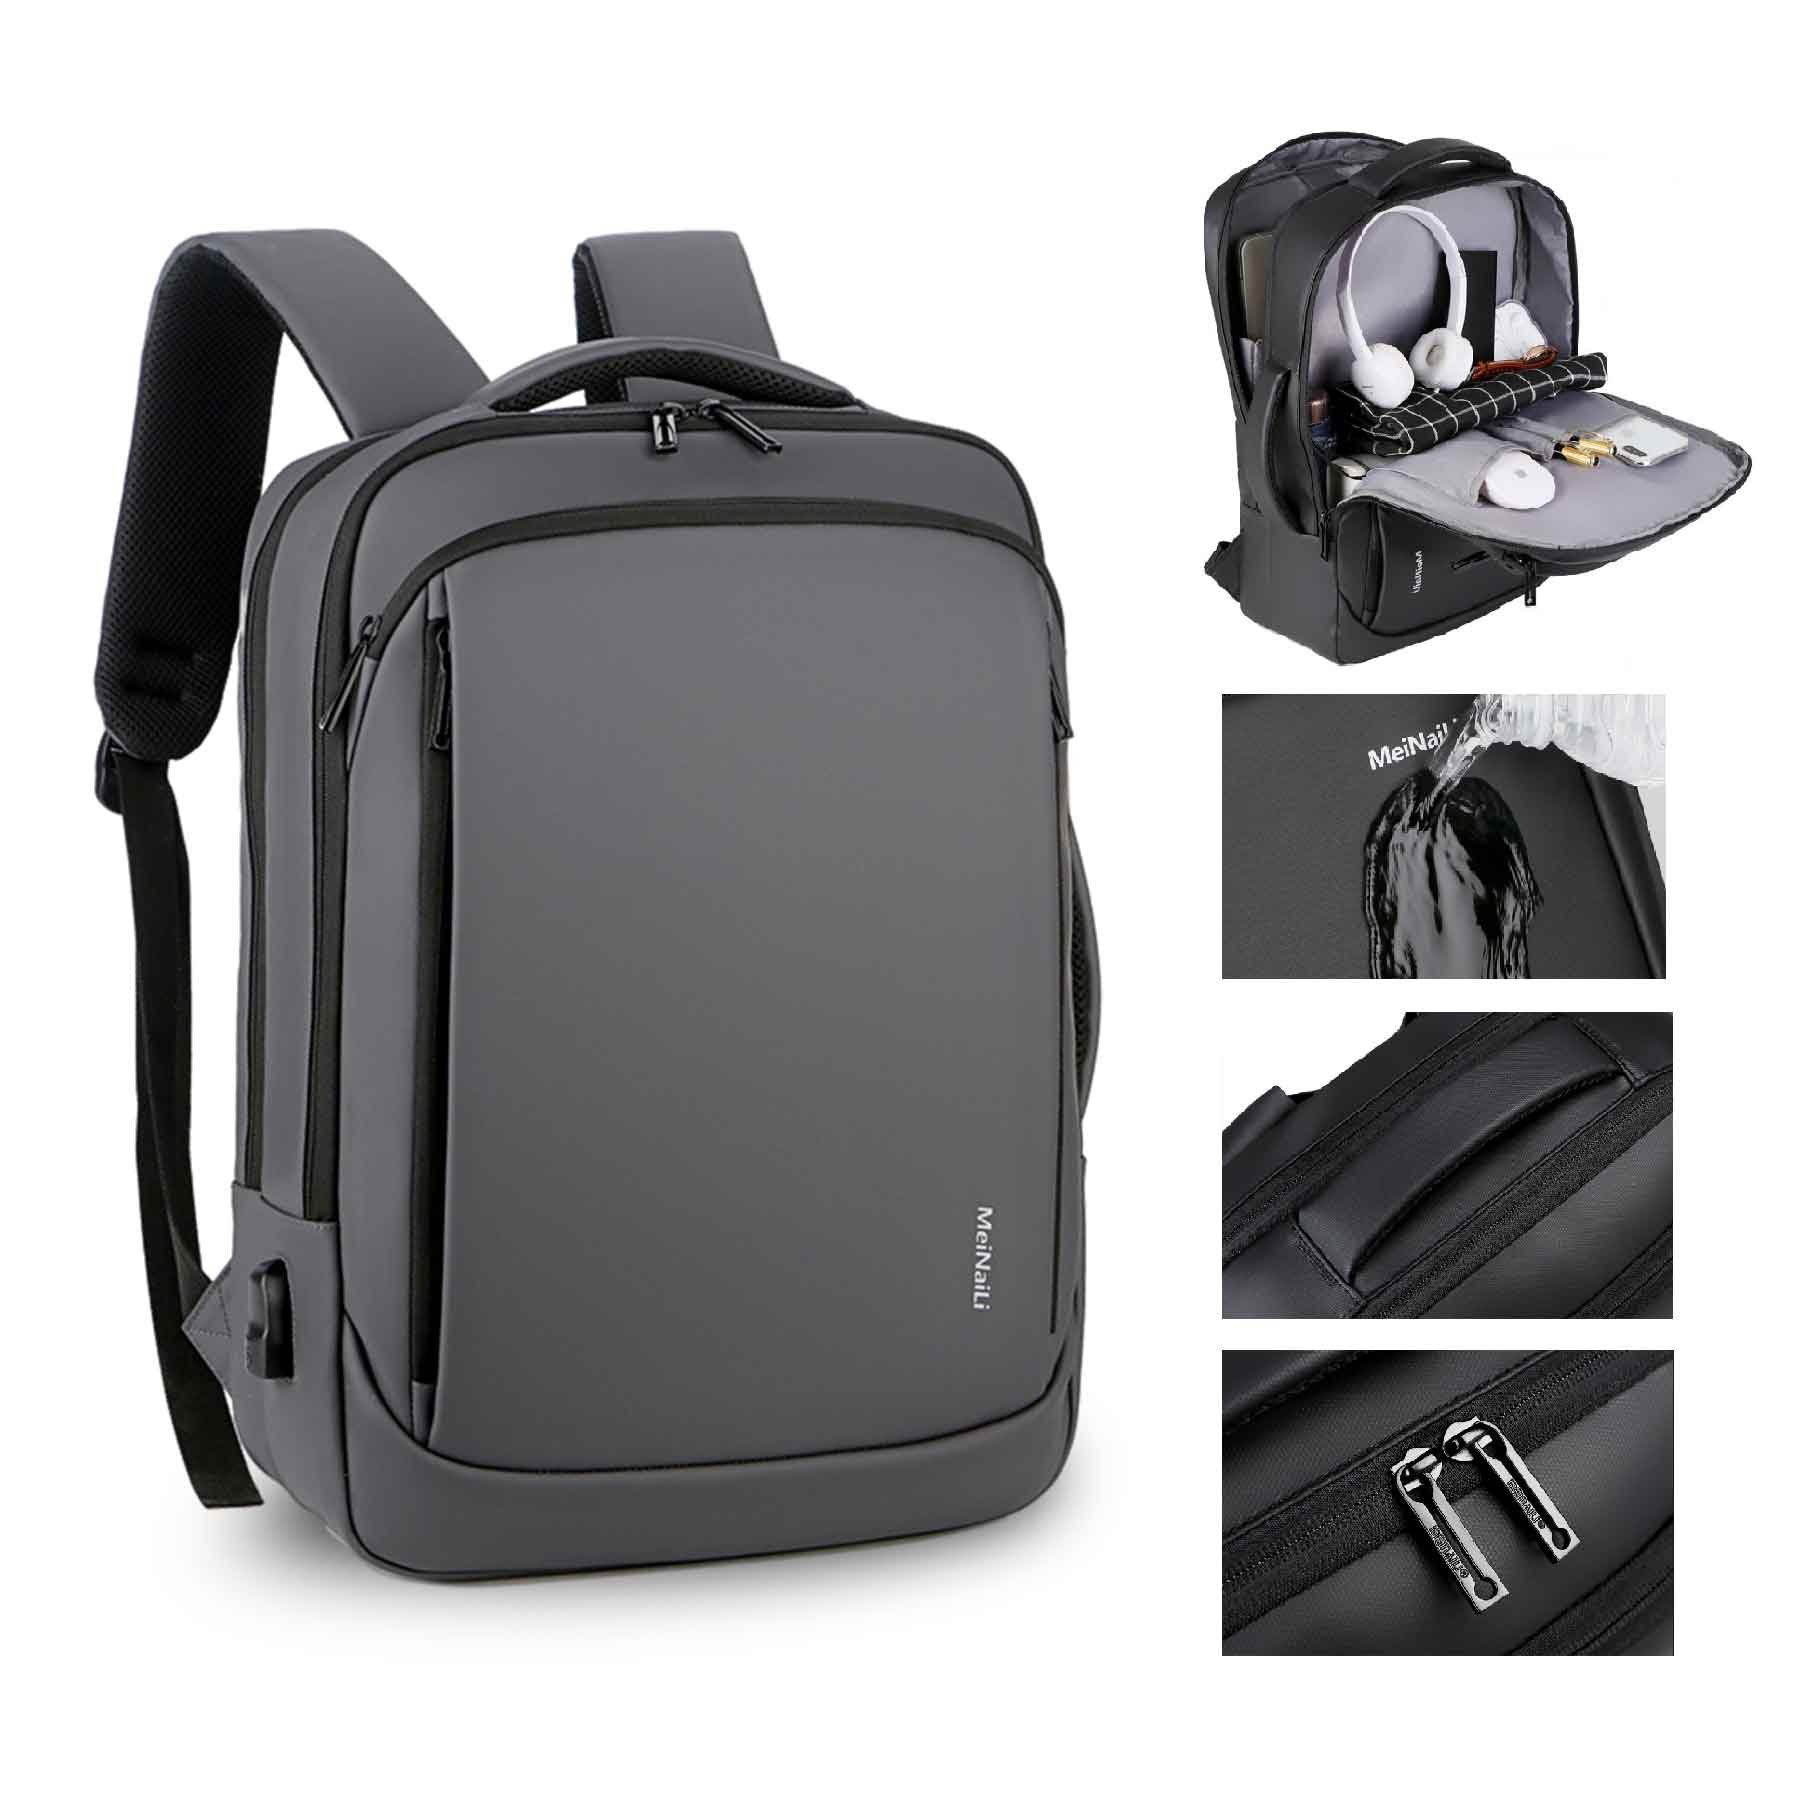 Reise Schule Laptop Tasche Rucksack Backpack Sportrucksack USB Port Wasserdicht 